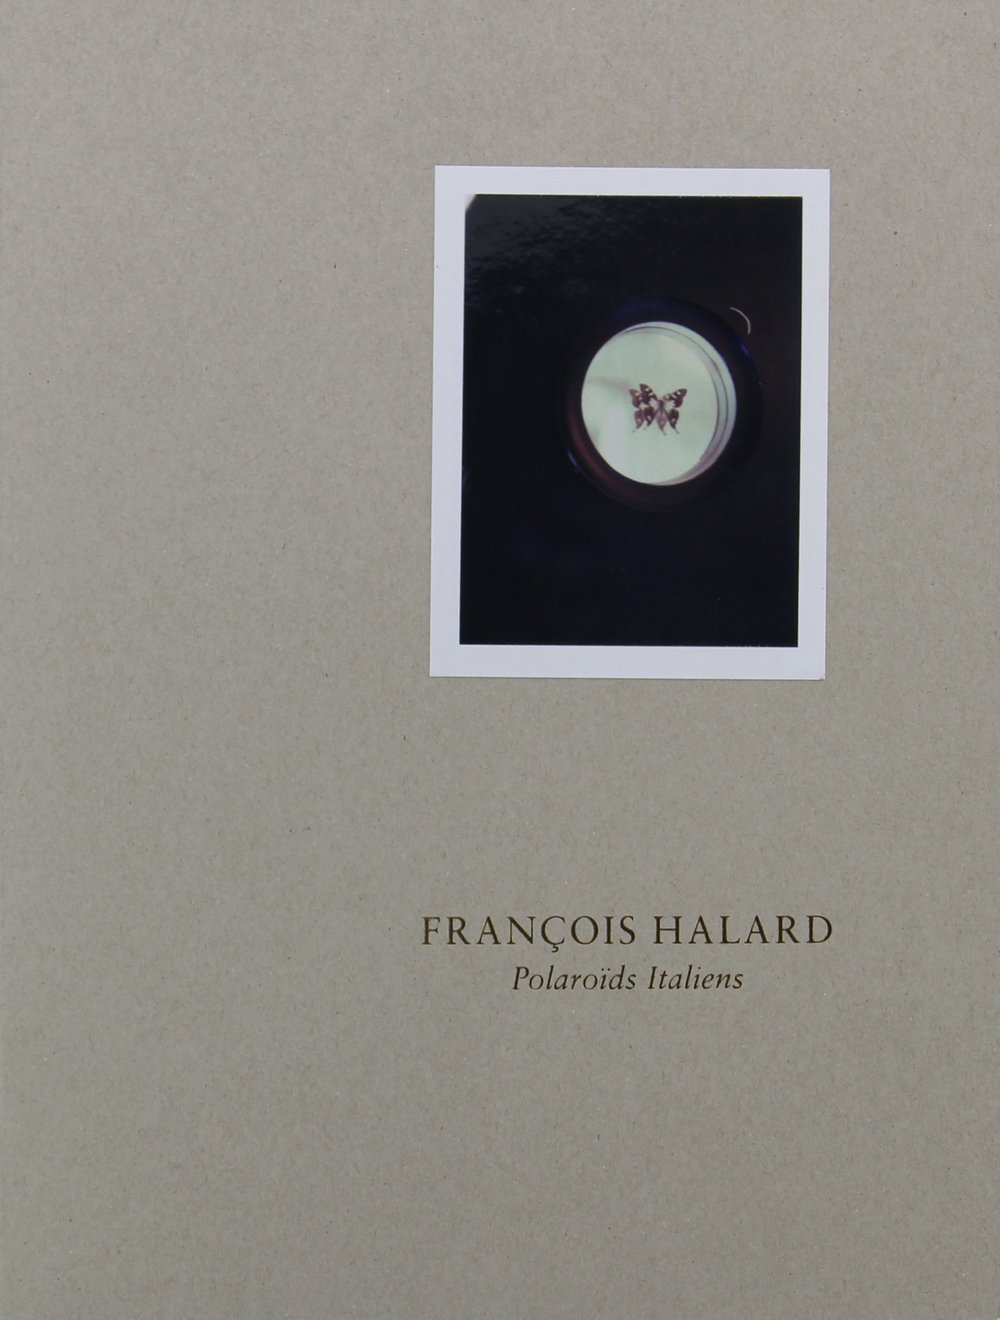 Francois Halard: Polaroids Italiens